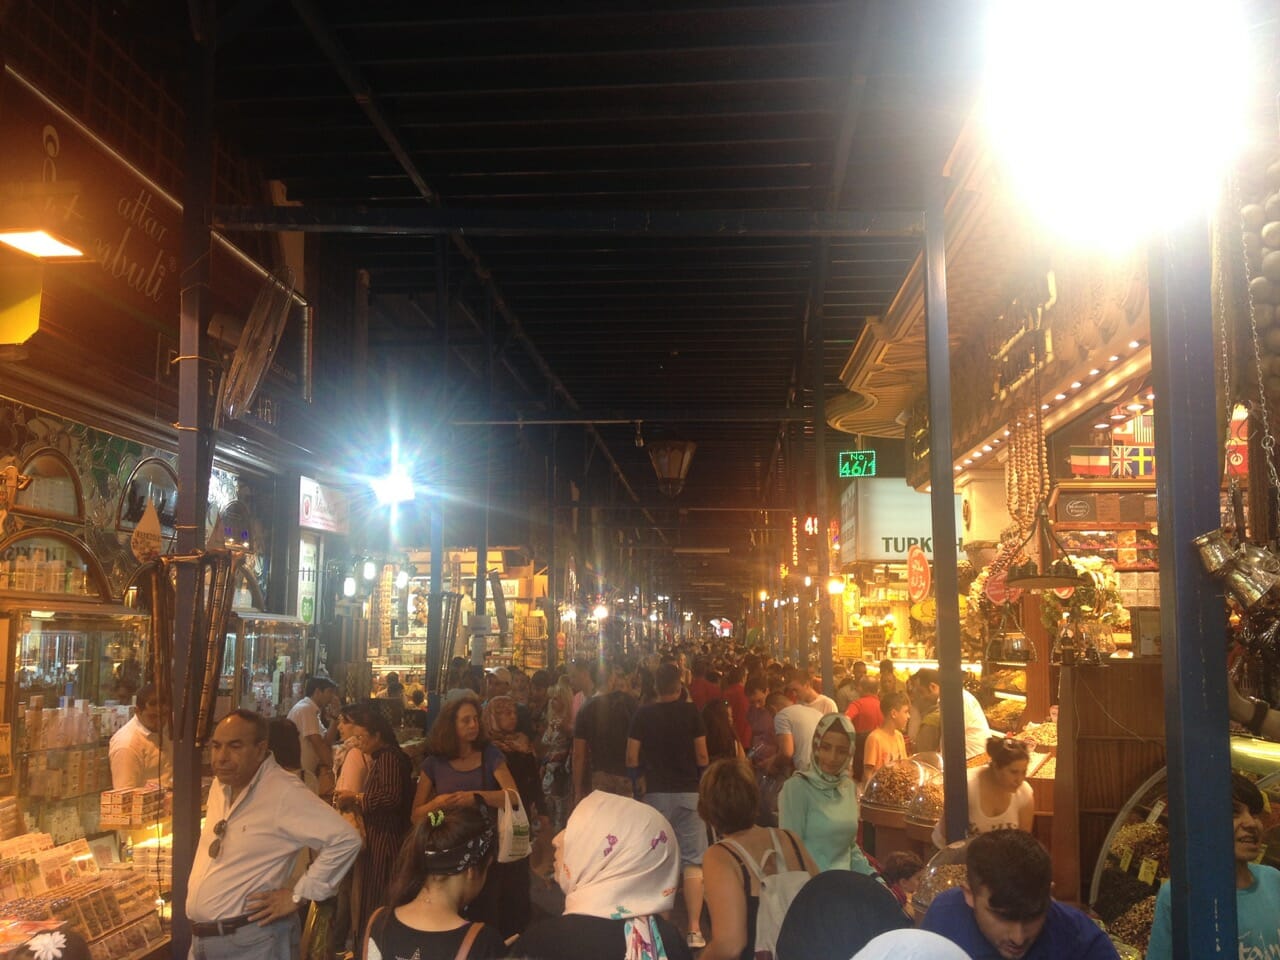 People inside the Spice Bazaar, Istanbul.